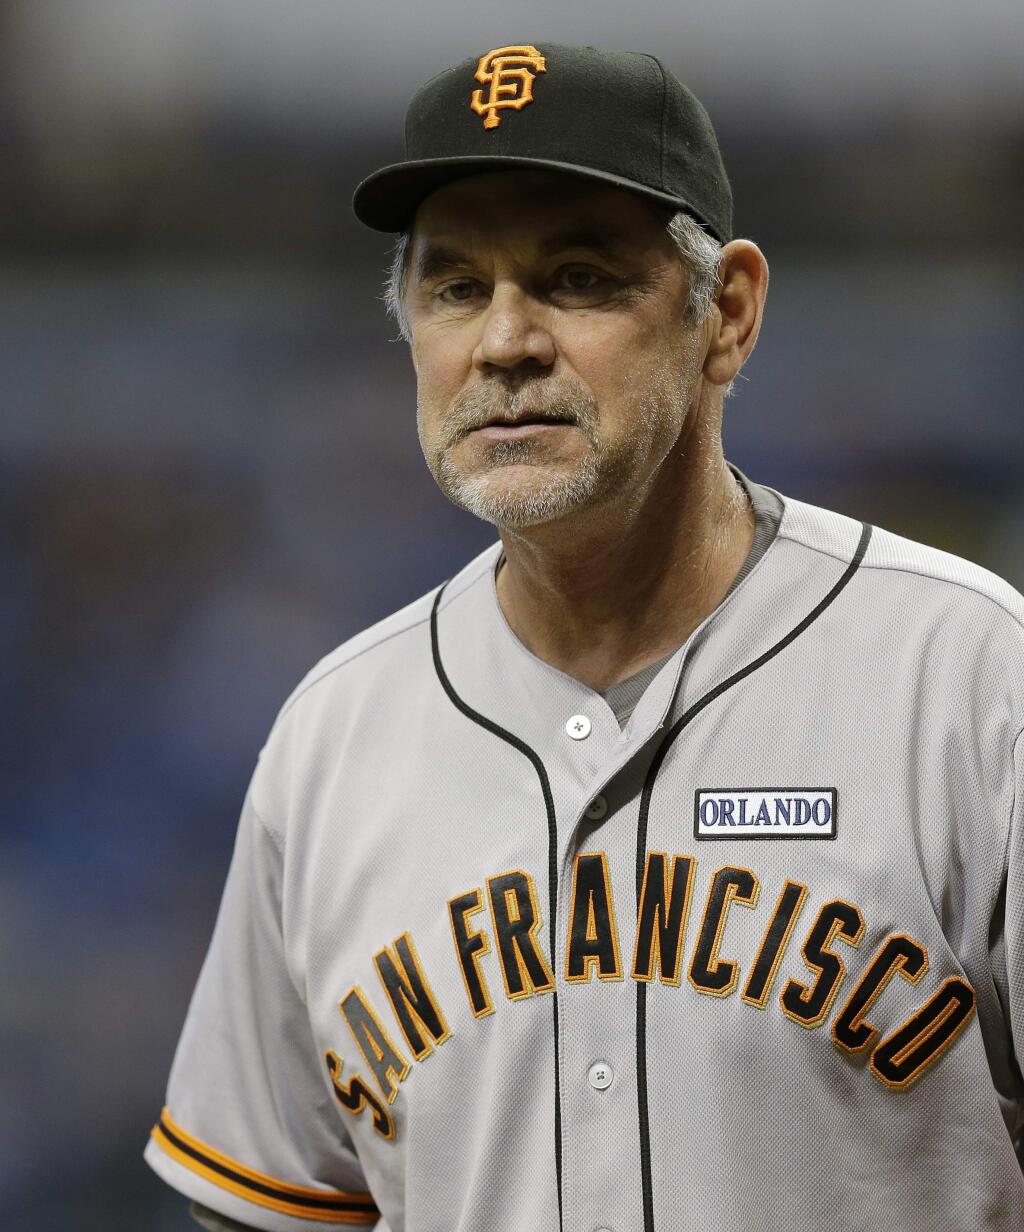 San Francisco Giants manager Bruce Bochy. (AP Photo/Chris O'Meara)